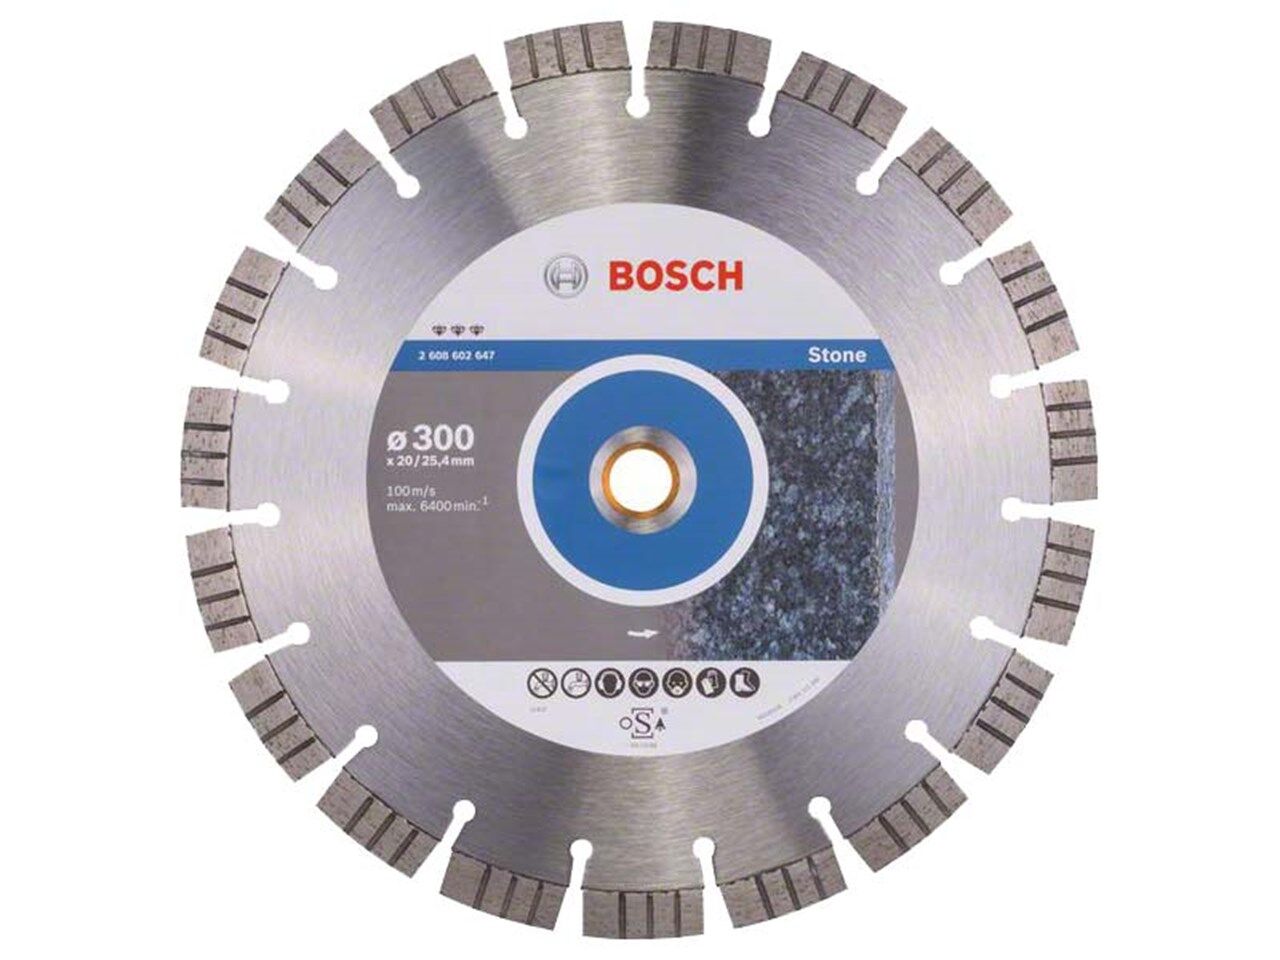 Алмазный диск Bosch 2608602647